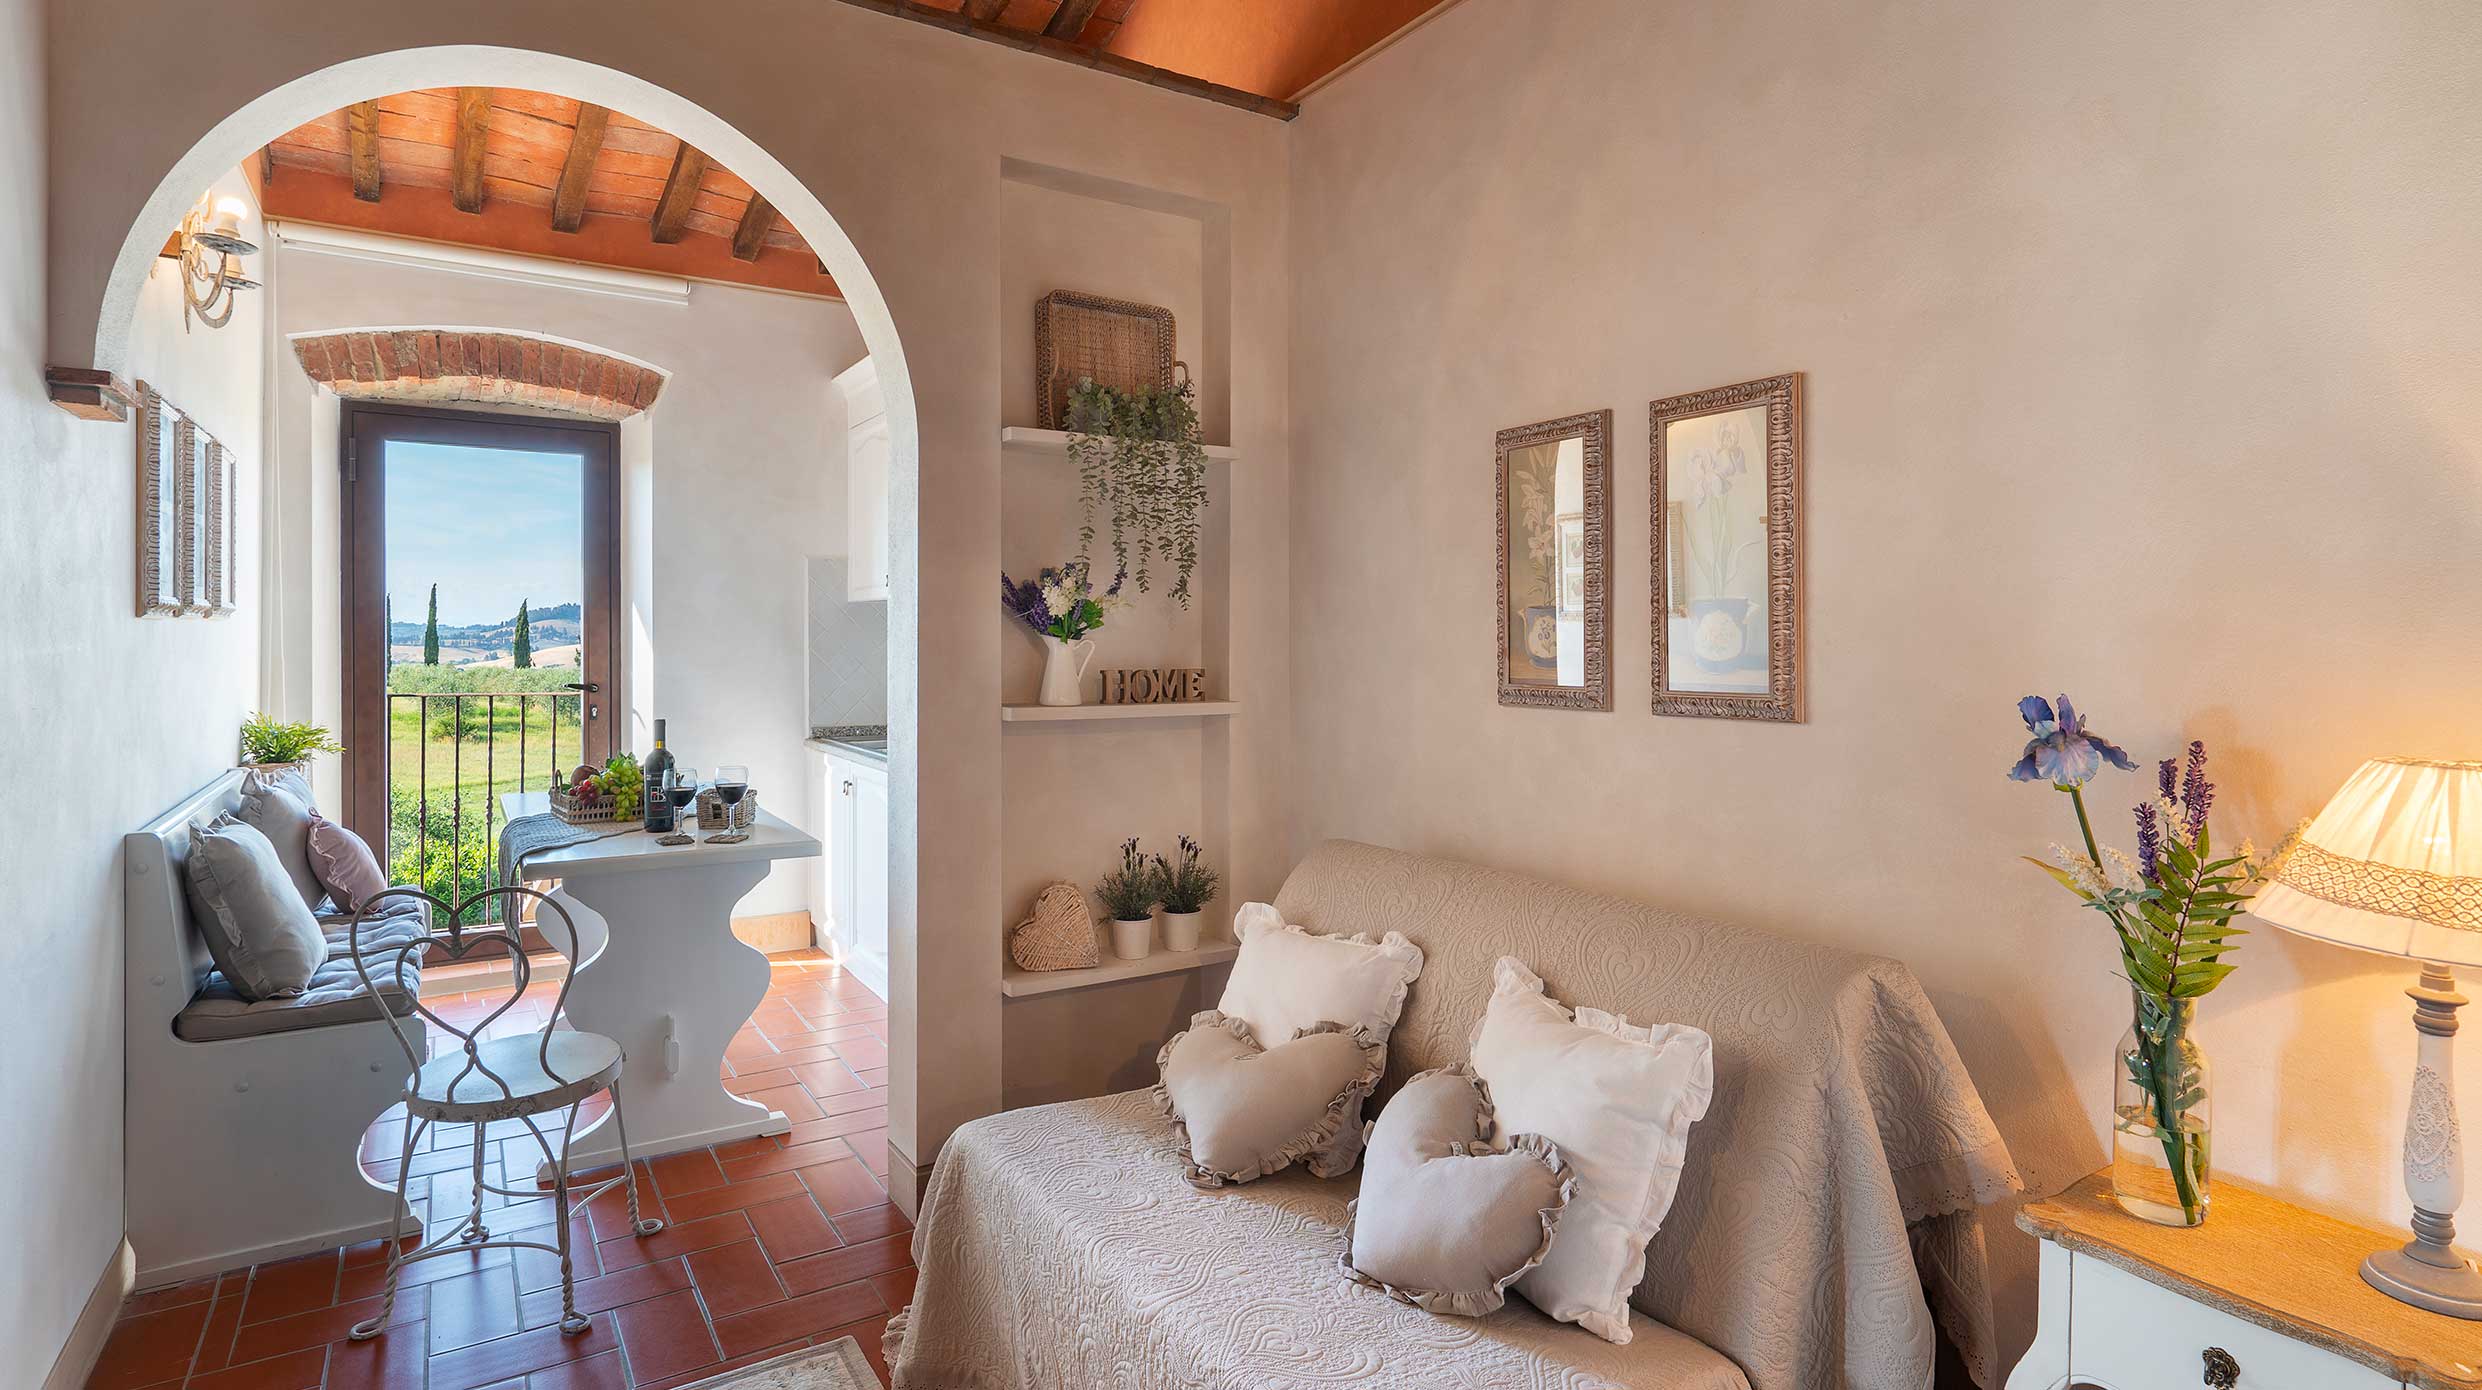 interior apartment La Mandriola near Volterra